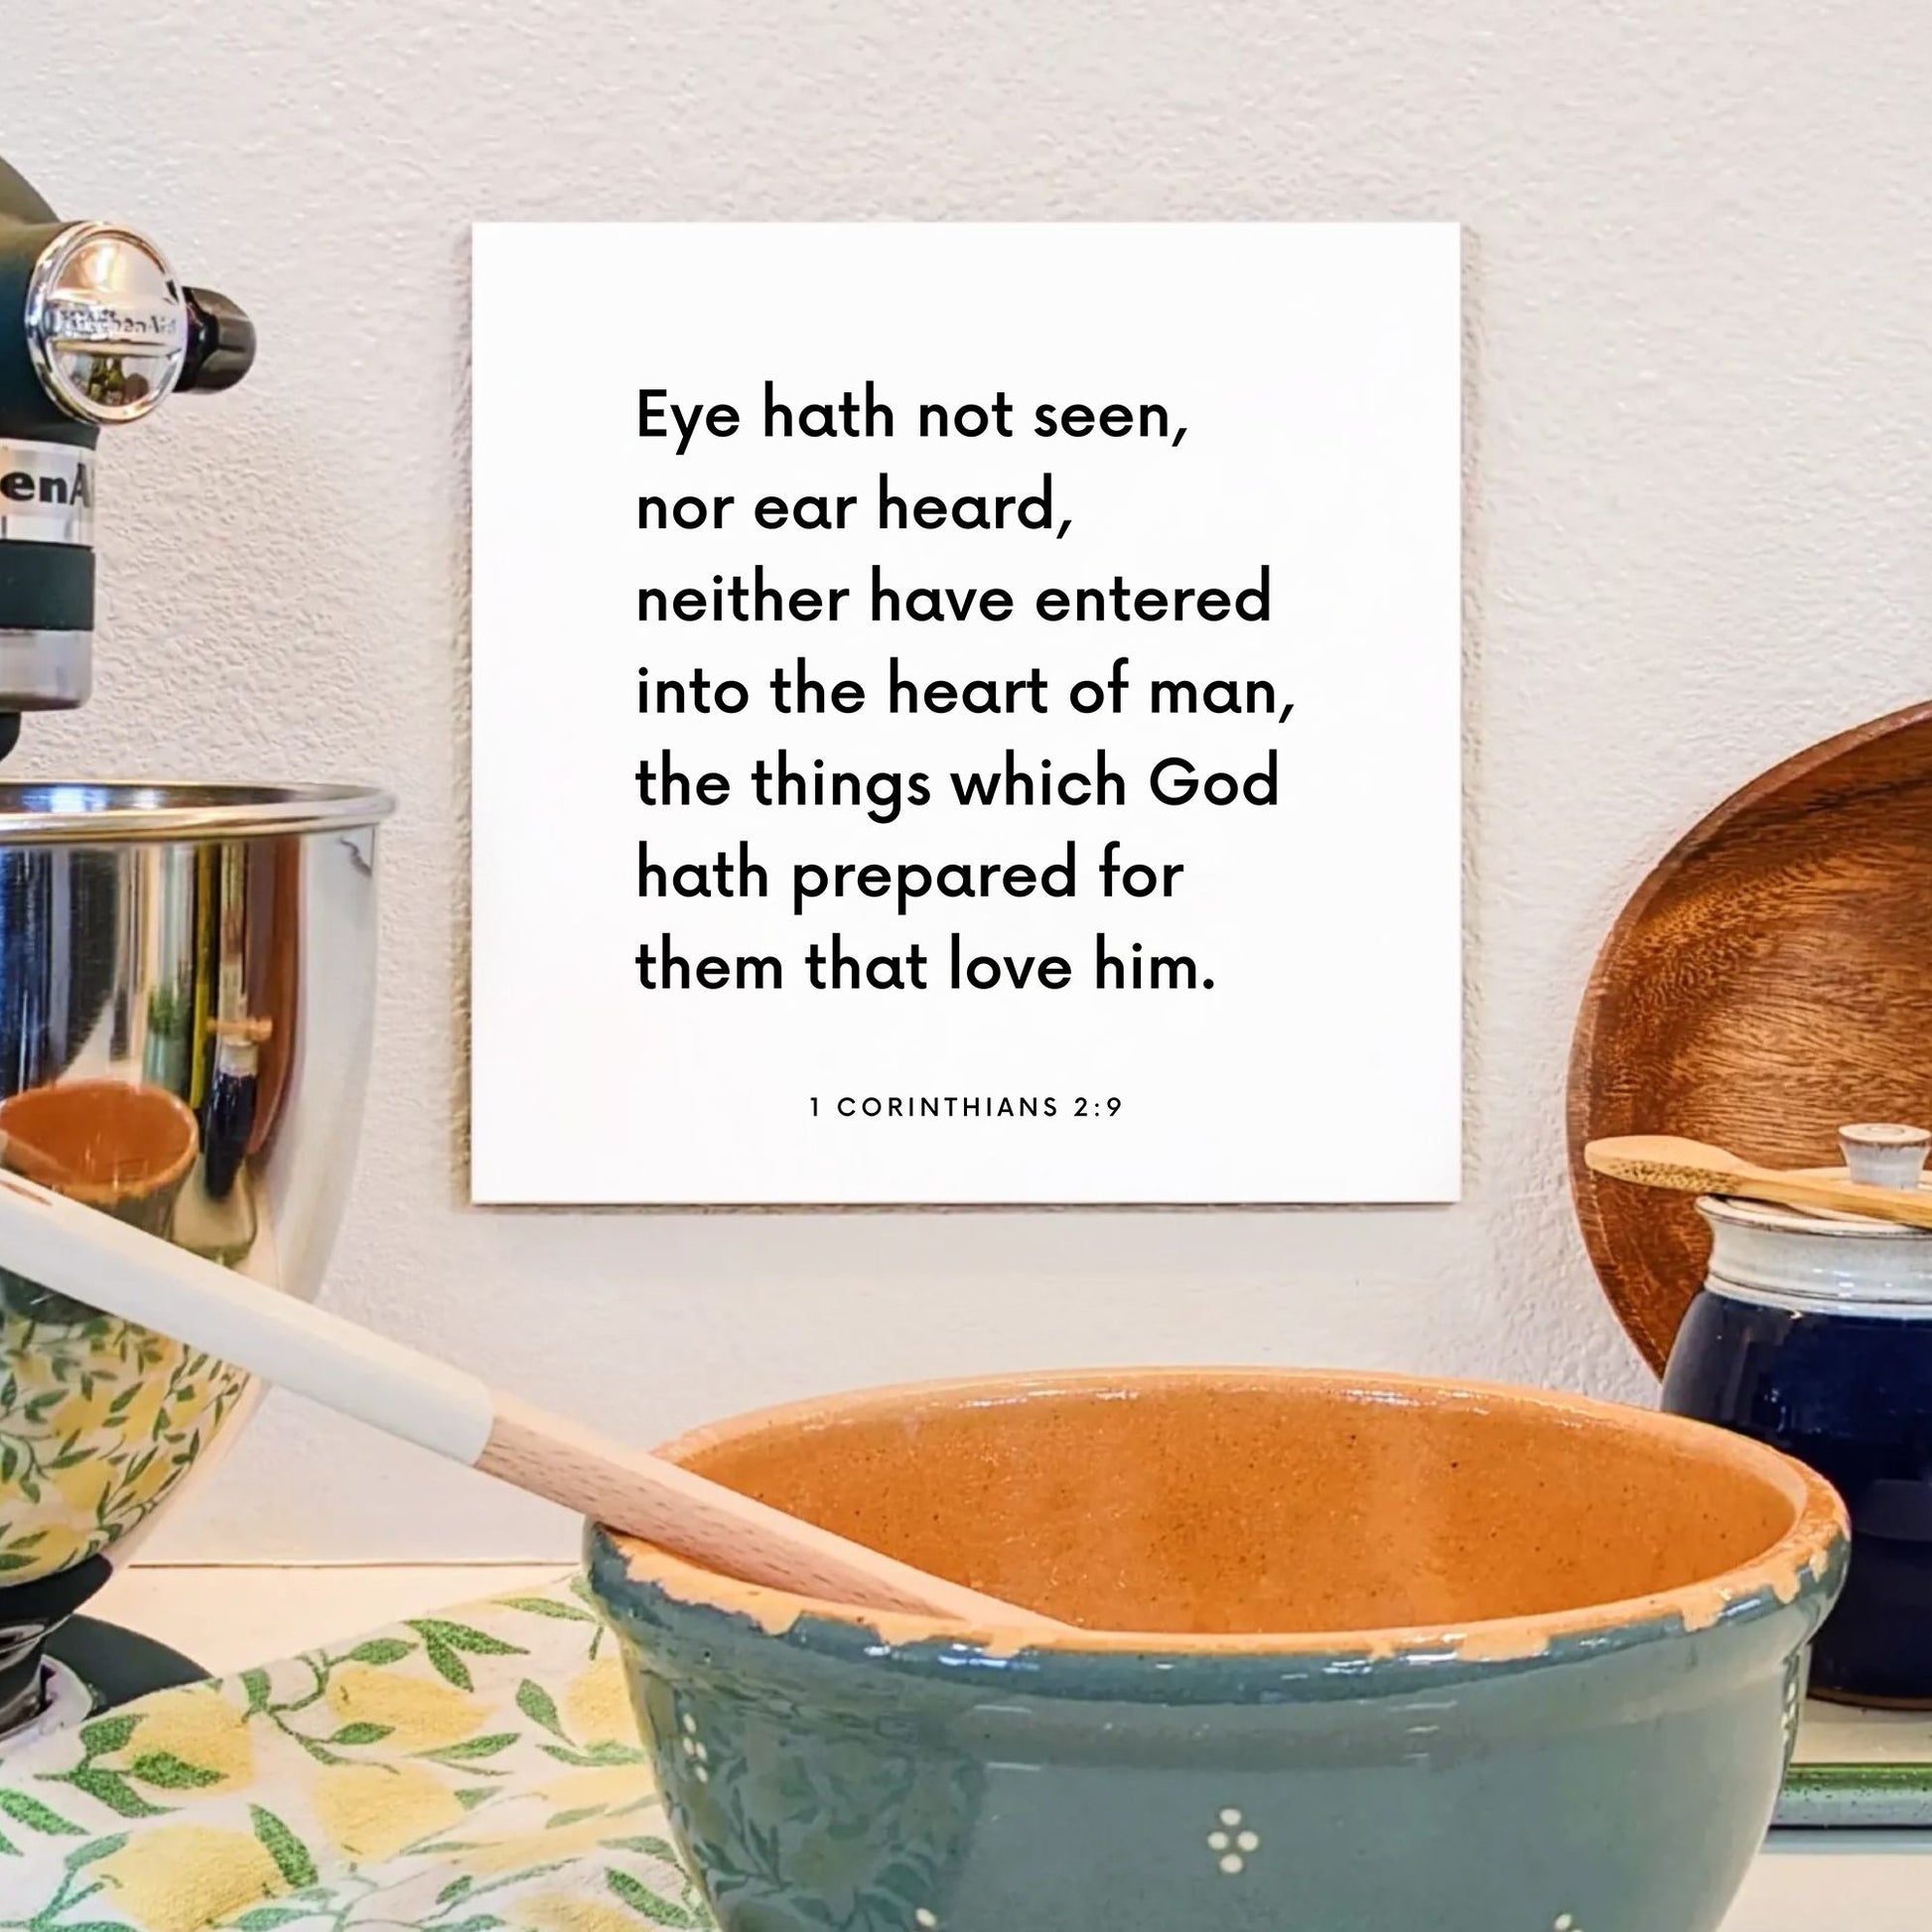 Kitchen mouting of the scripture tile for 1 Corinthians 2:9 - "Eye hath not seen, nor ear heard"